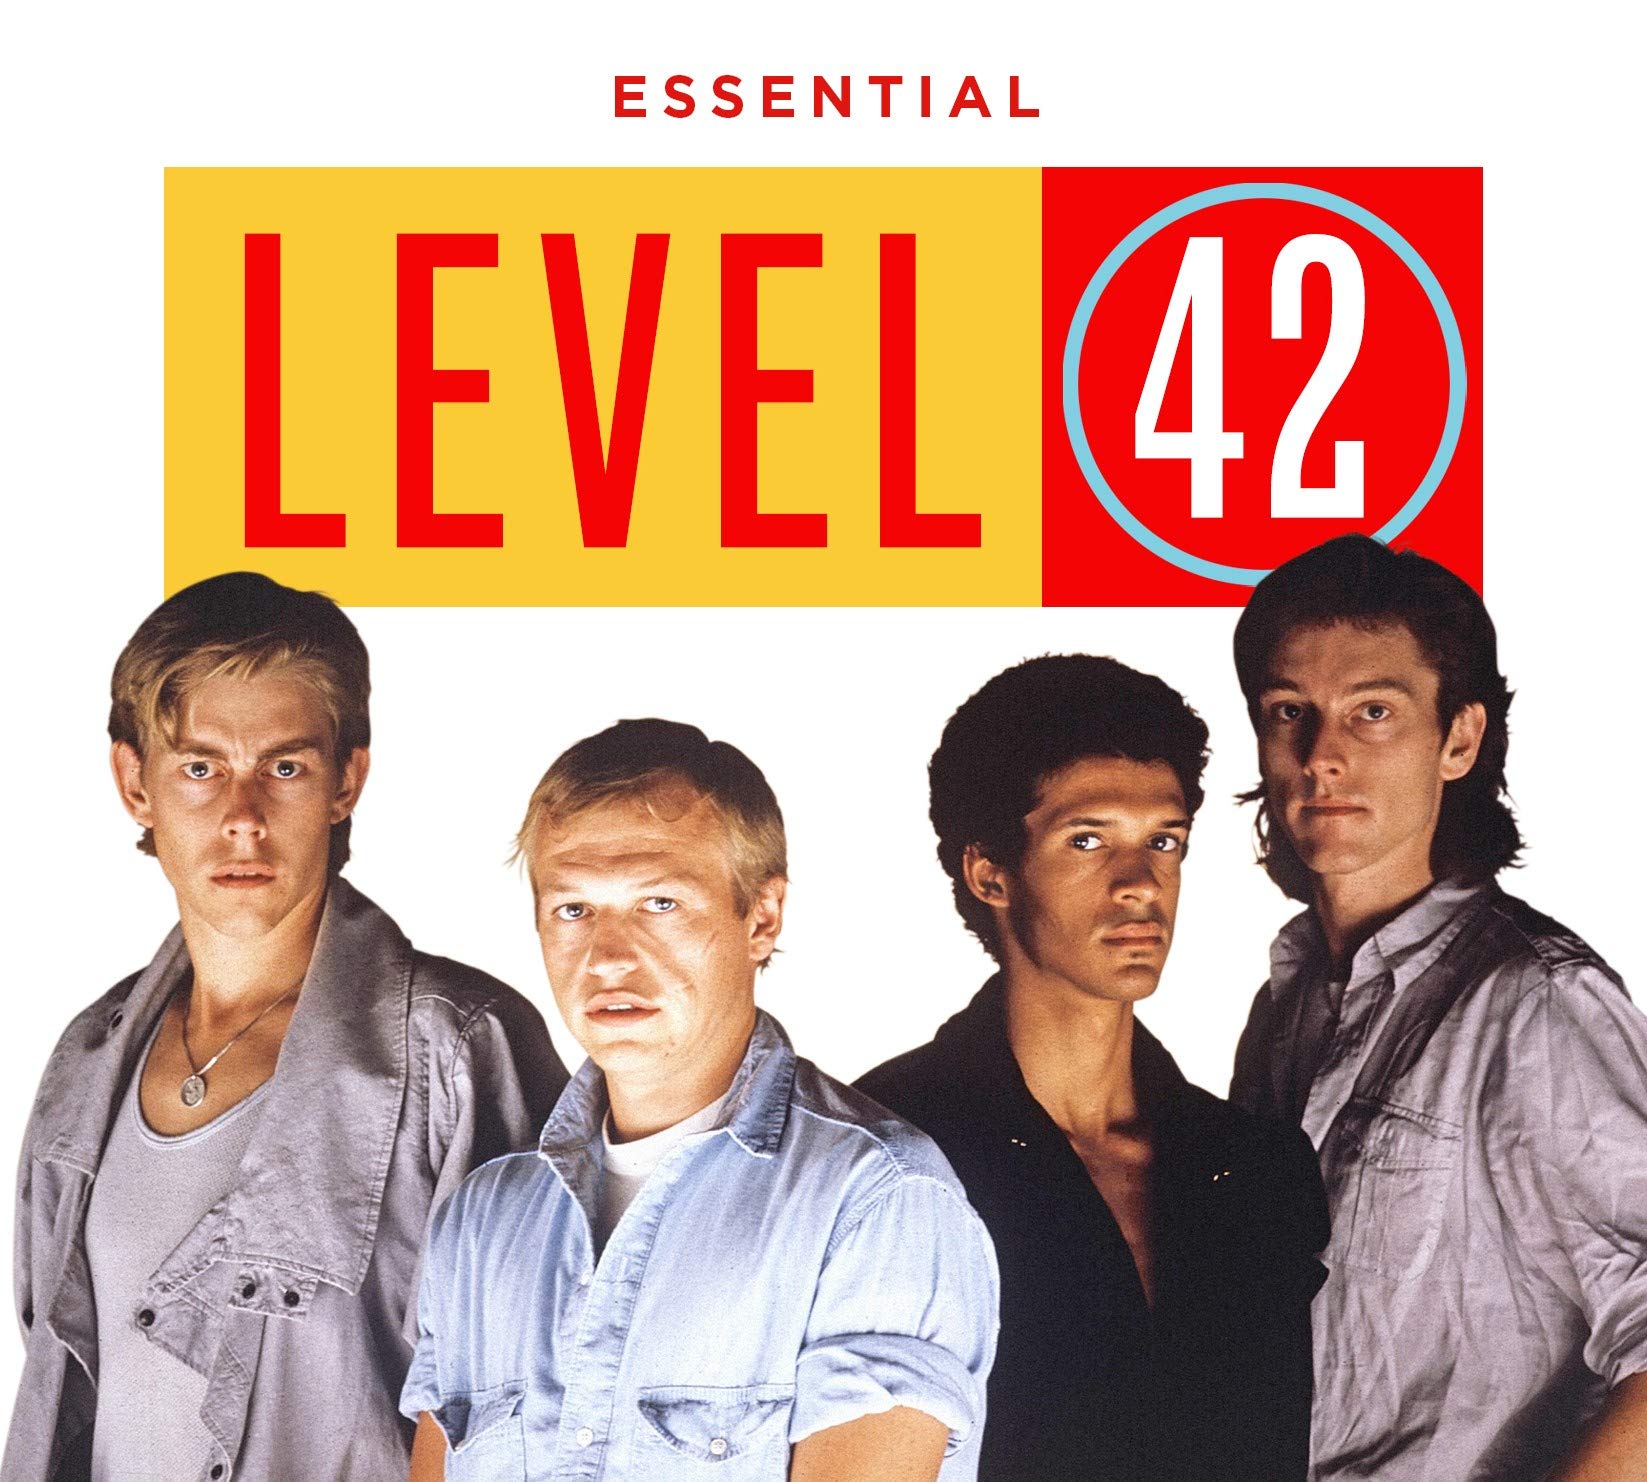 level 42 australian tour